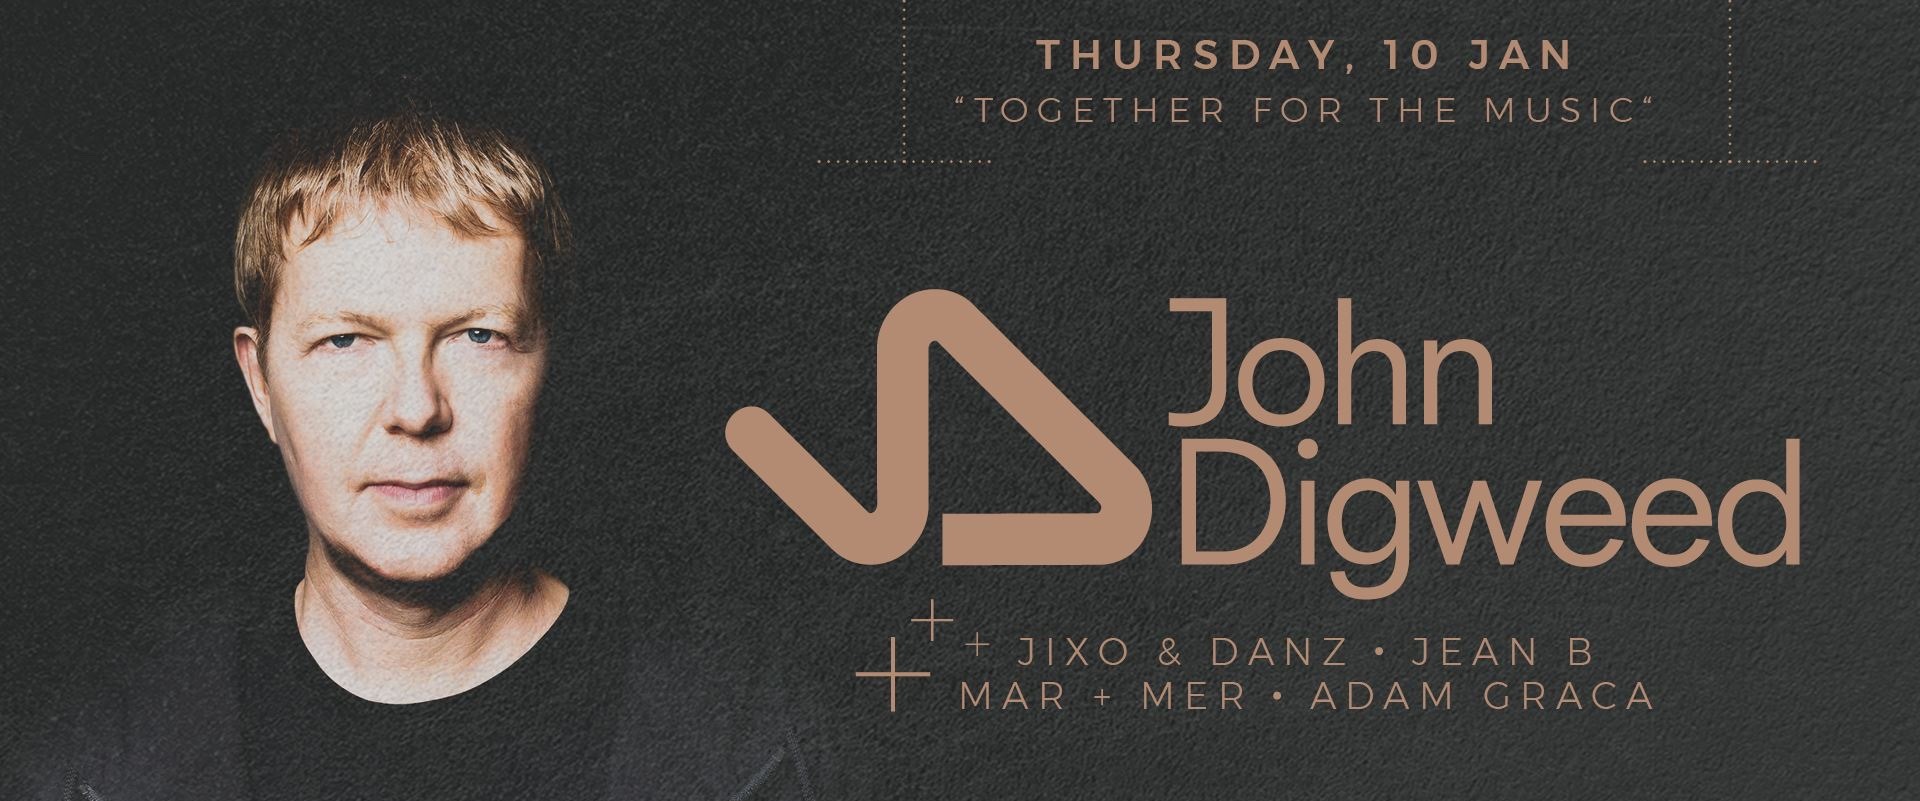 Soho Garden presents John Digweed - Coming Soon in UAE